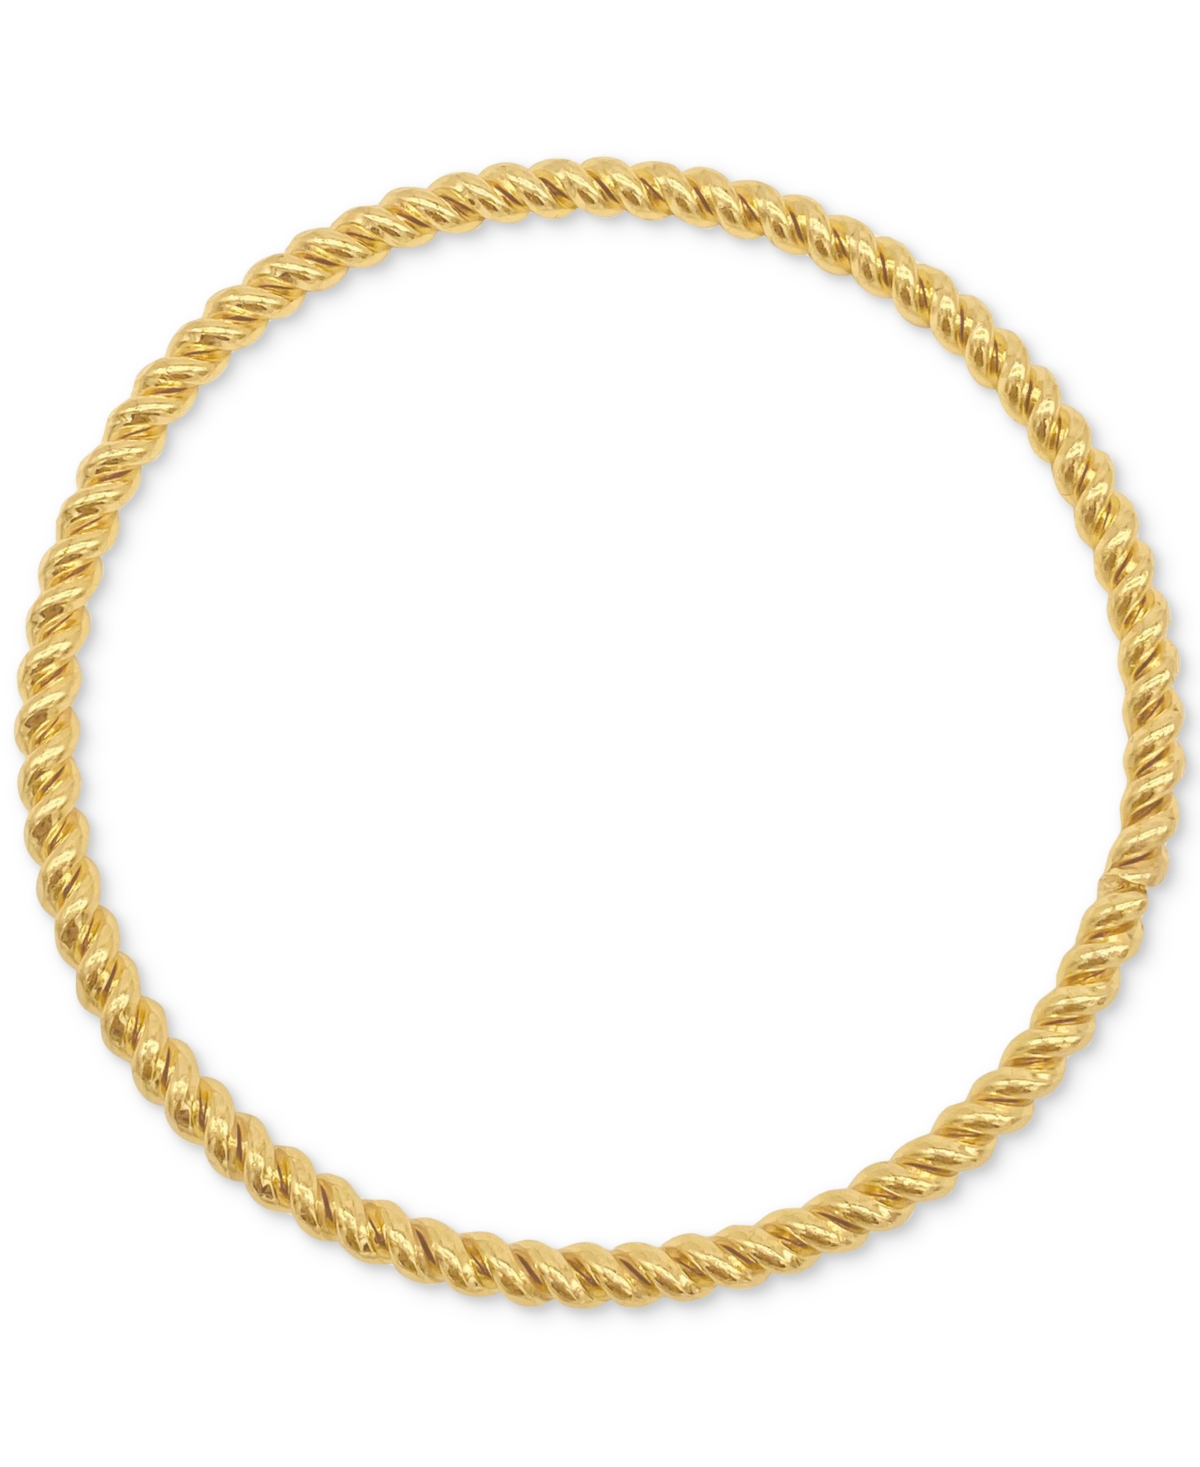 14k Gold-Plated Rope-Look Bangle Bracelet - Gold